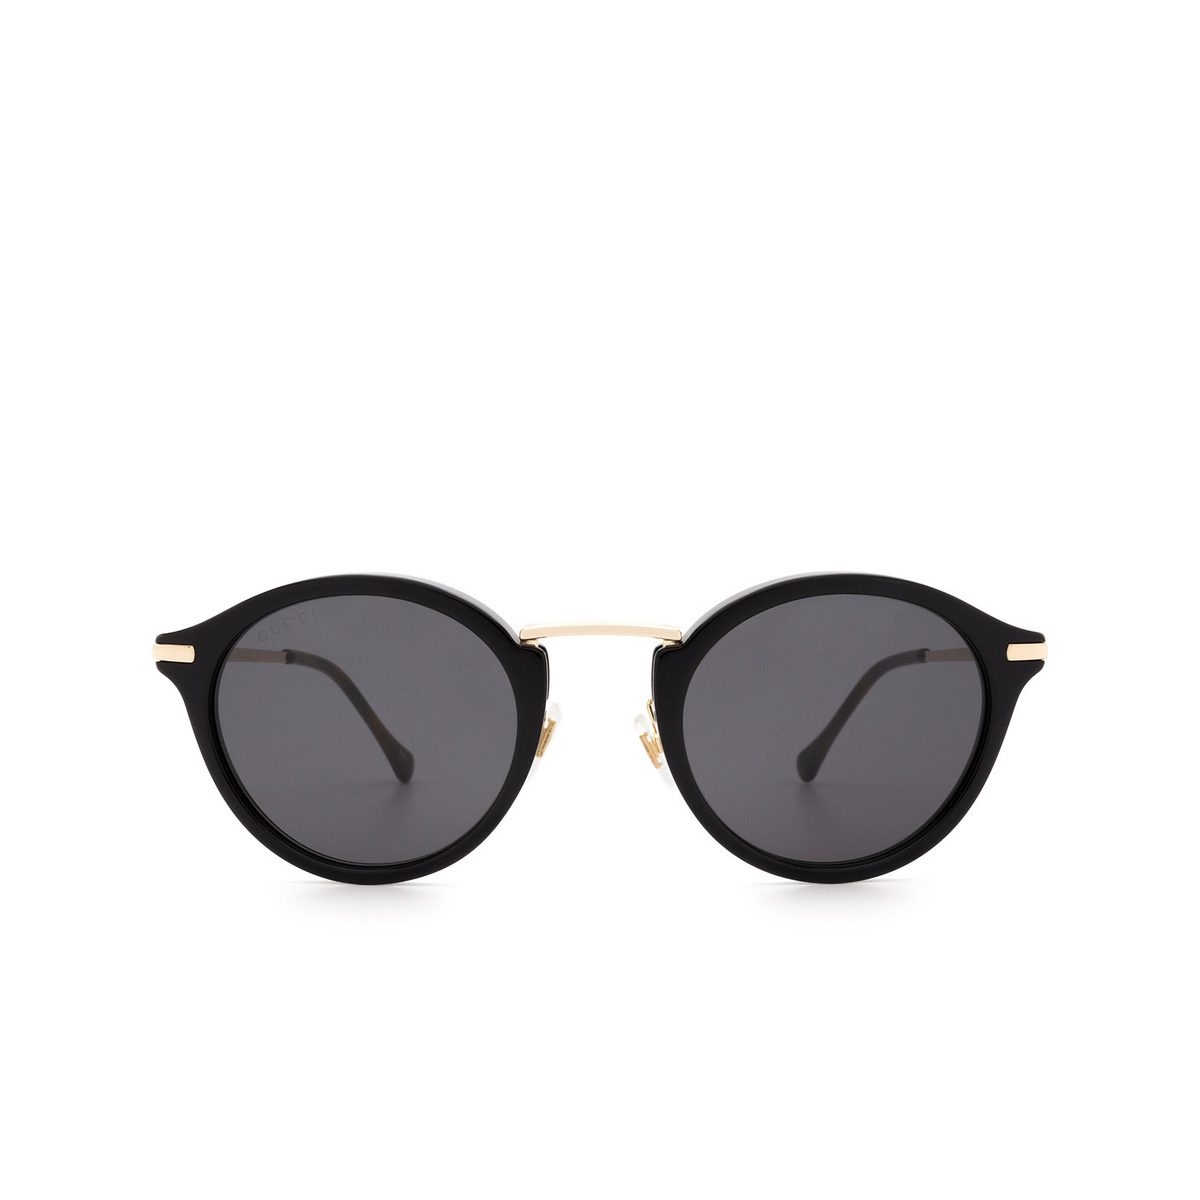 Gucci® Sunglasses: GG0917S color Black 001 - front view.